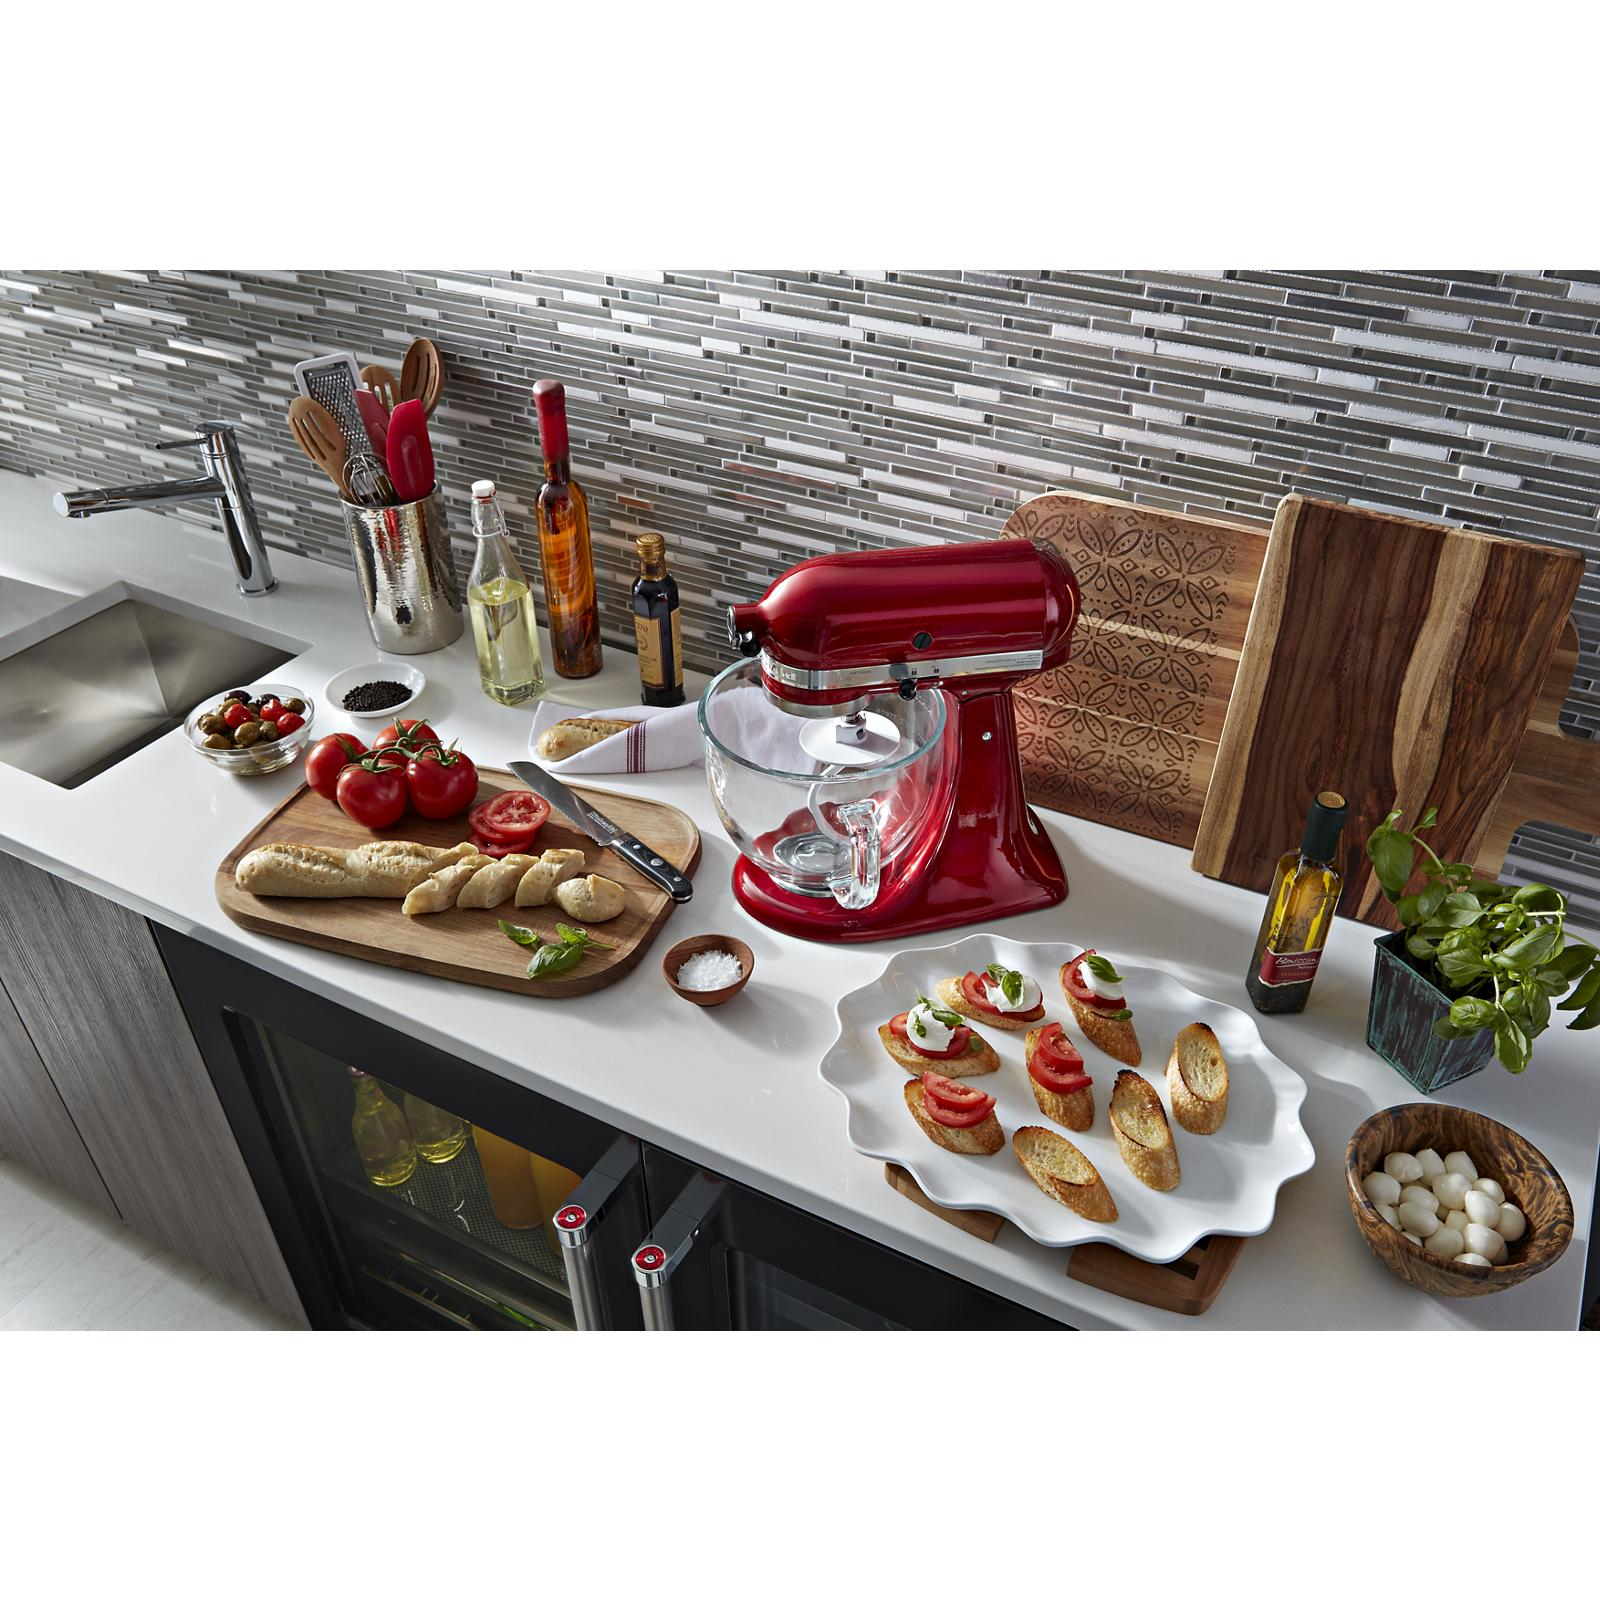 KitchenAid KSM155GBCA 5-Qt. Artisan Design Series with Glass Bowl - Candy Apple Red